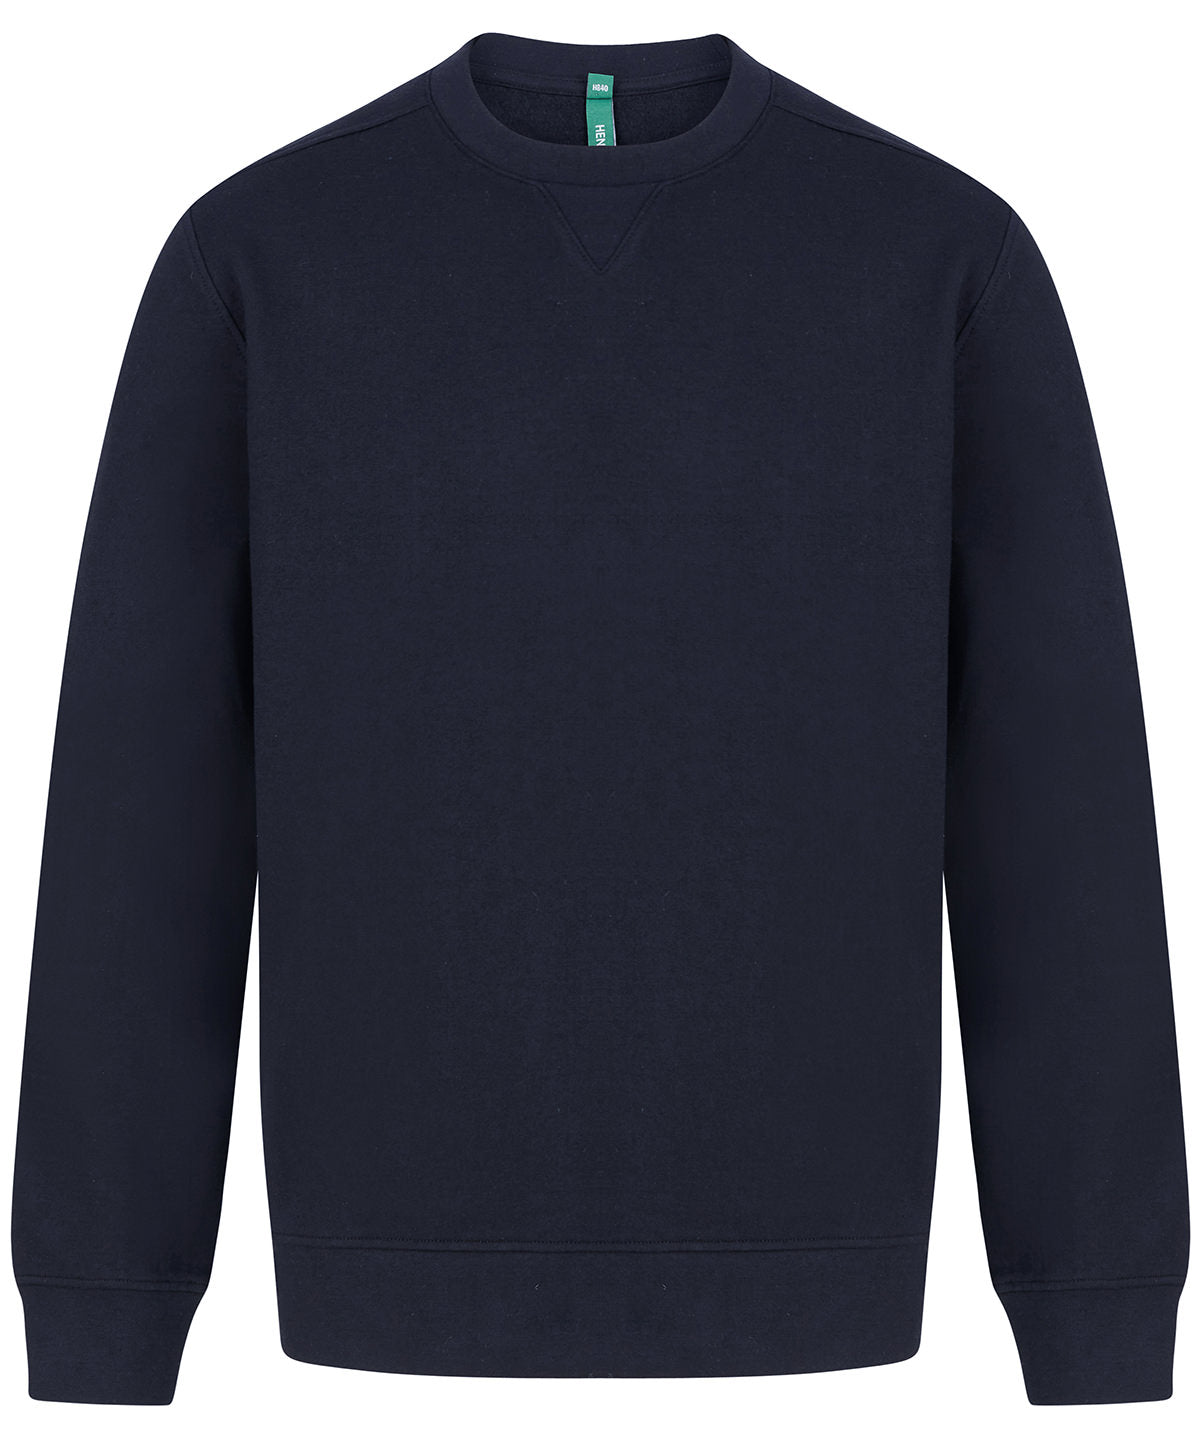 Personalised Sweatshirts - Black Henbury Unisex sustainable sweatshirt